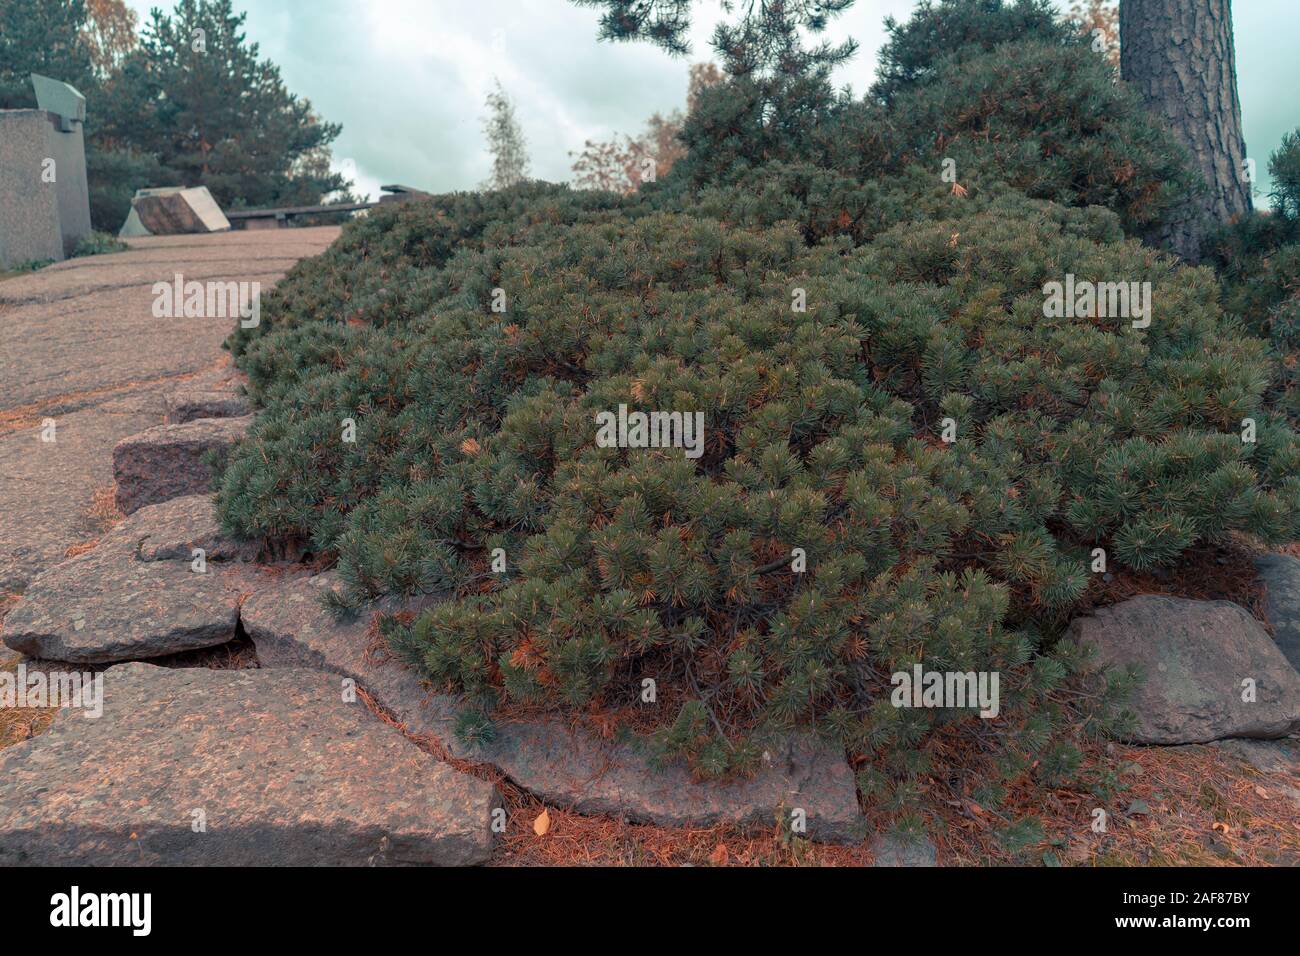 Coniferous Creeping Juniper Grows On Rock, Spruce, Fir, Pine, Landscape Design in Finland Park. Stock Photo